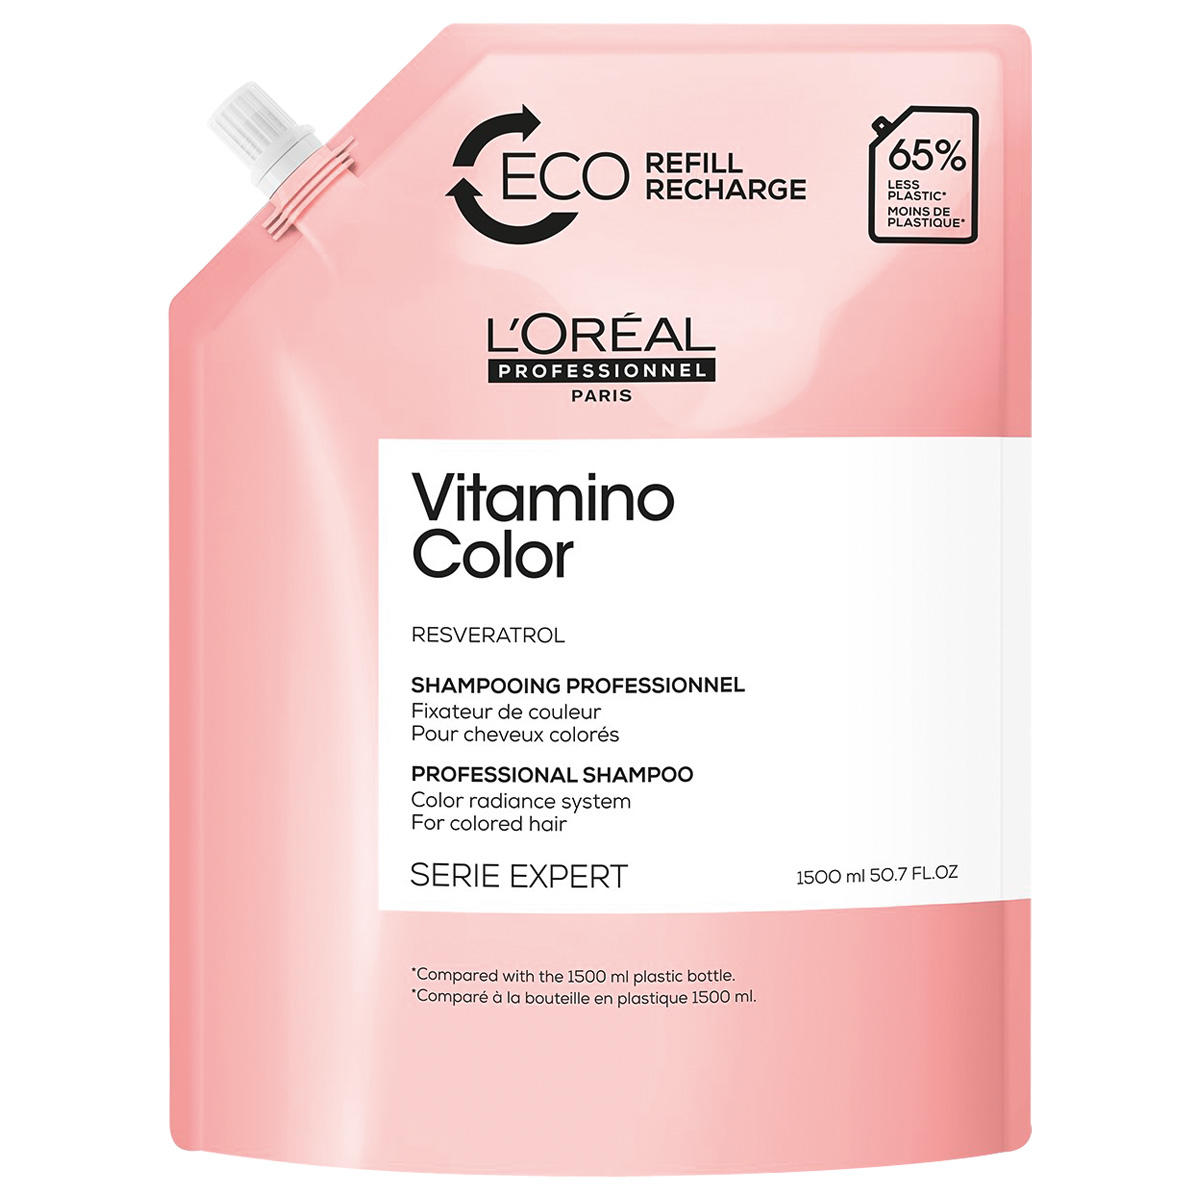 L'Oréal Professionnel Paris Serie Expert Vitamino Color Professional Shampoo Refill 1,5 litre - 1